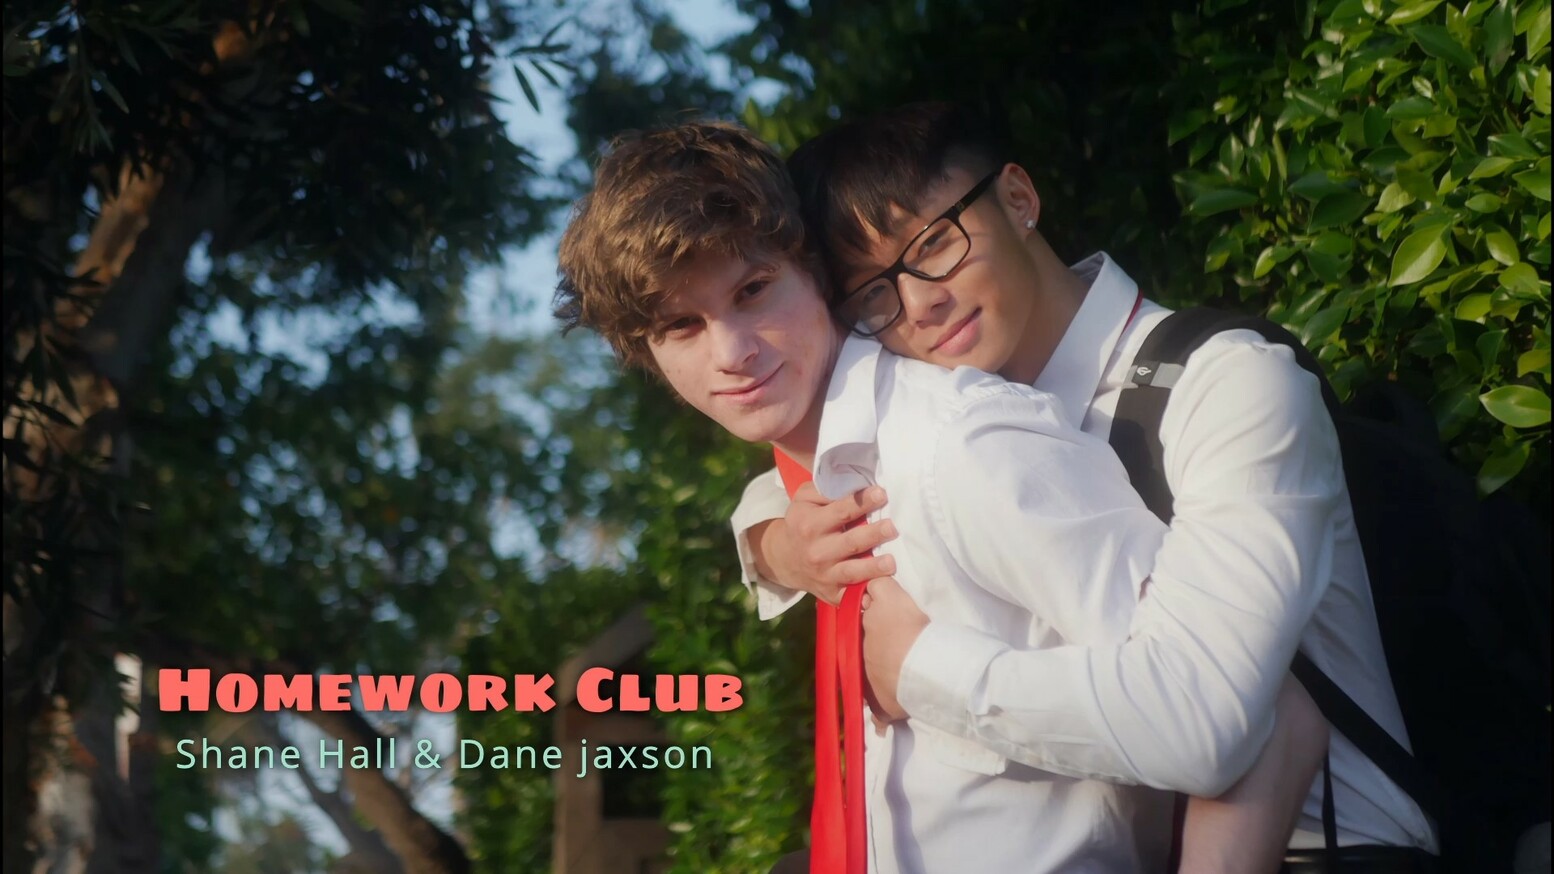 Homework Club (Dane Jaxson and Shane Hall) image